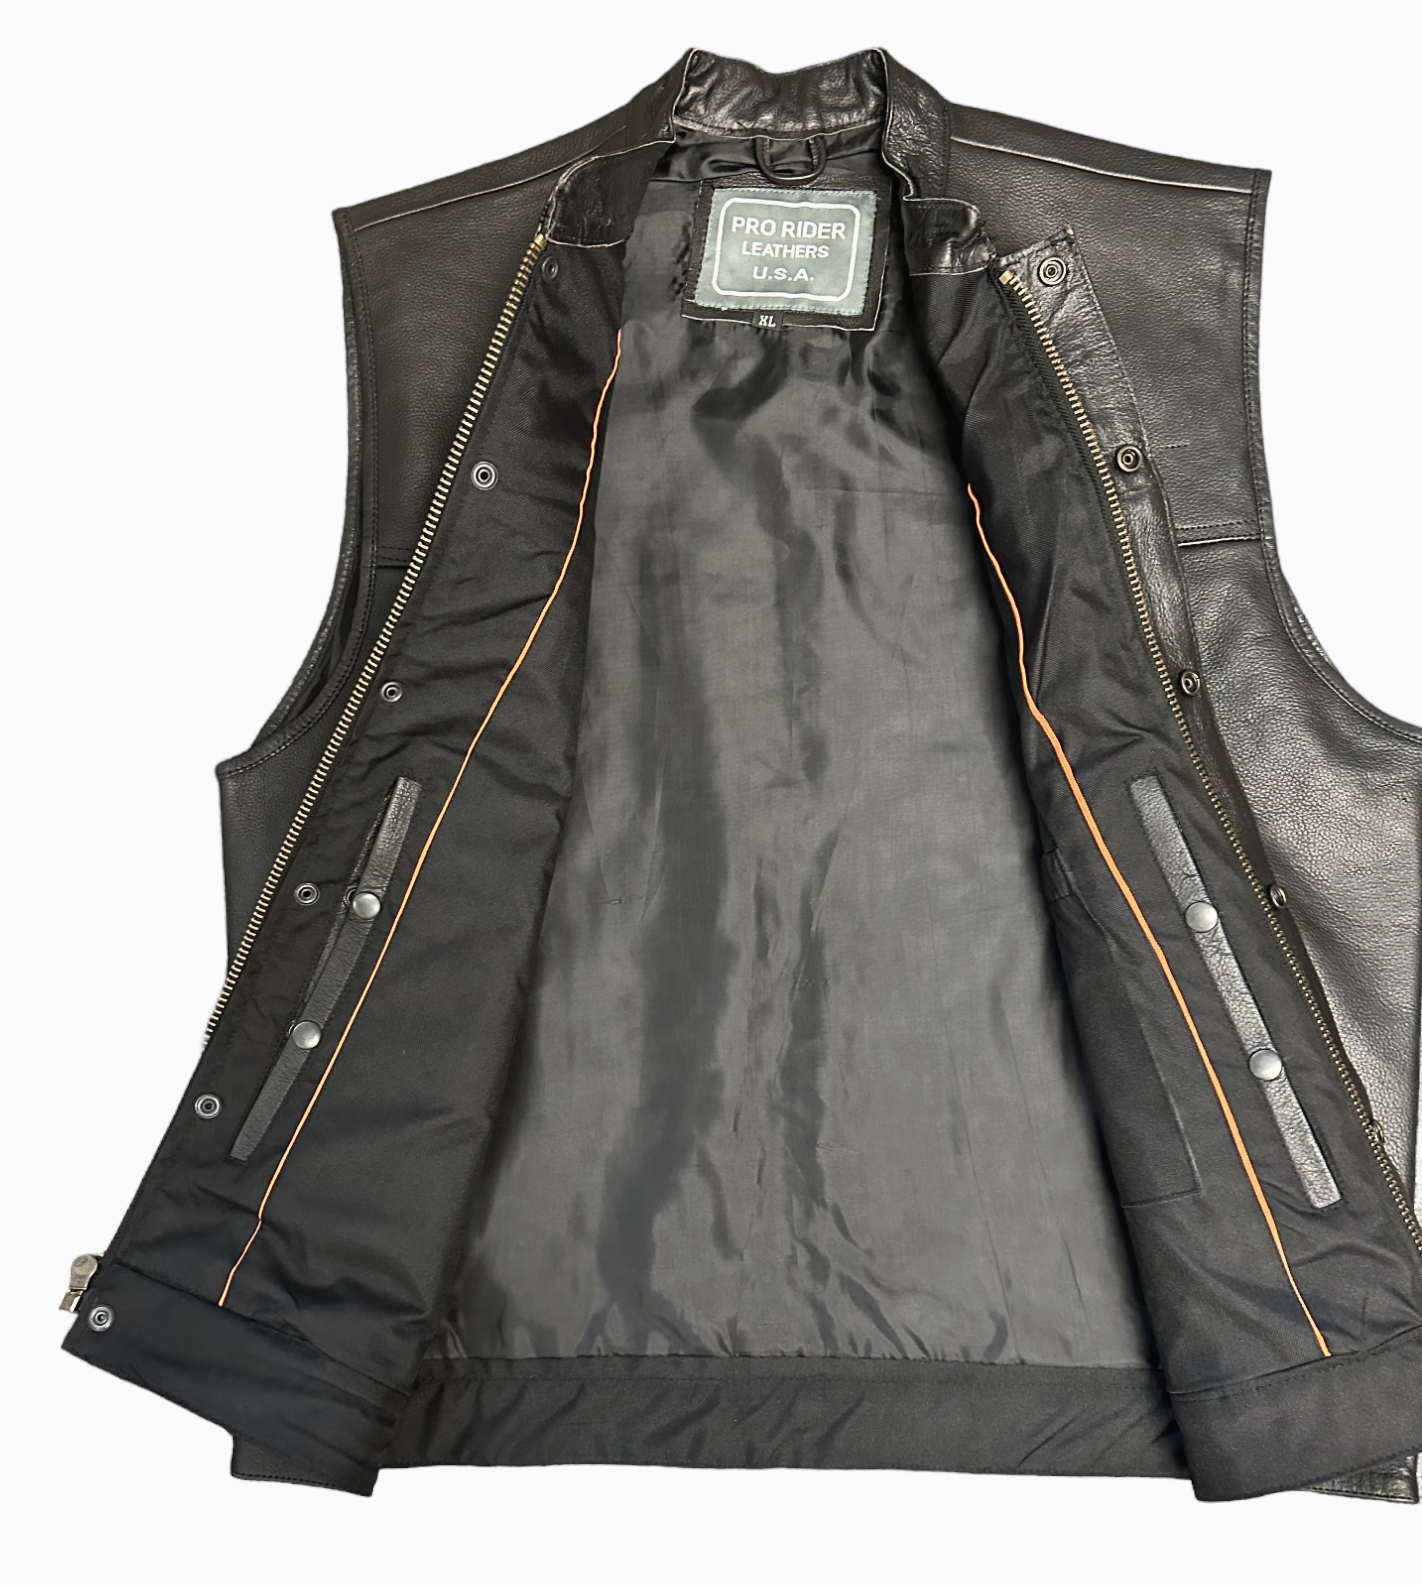 Men's Double Crosser Vest, Concealed carry pockets, Single panel back by Pro-Rider